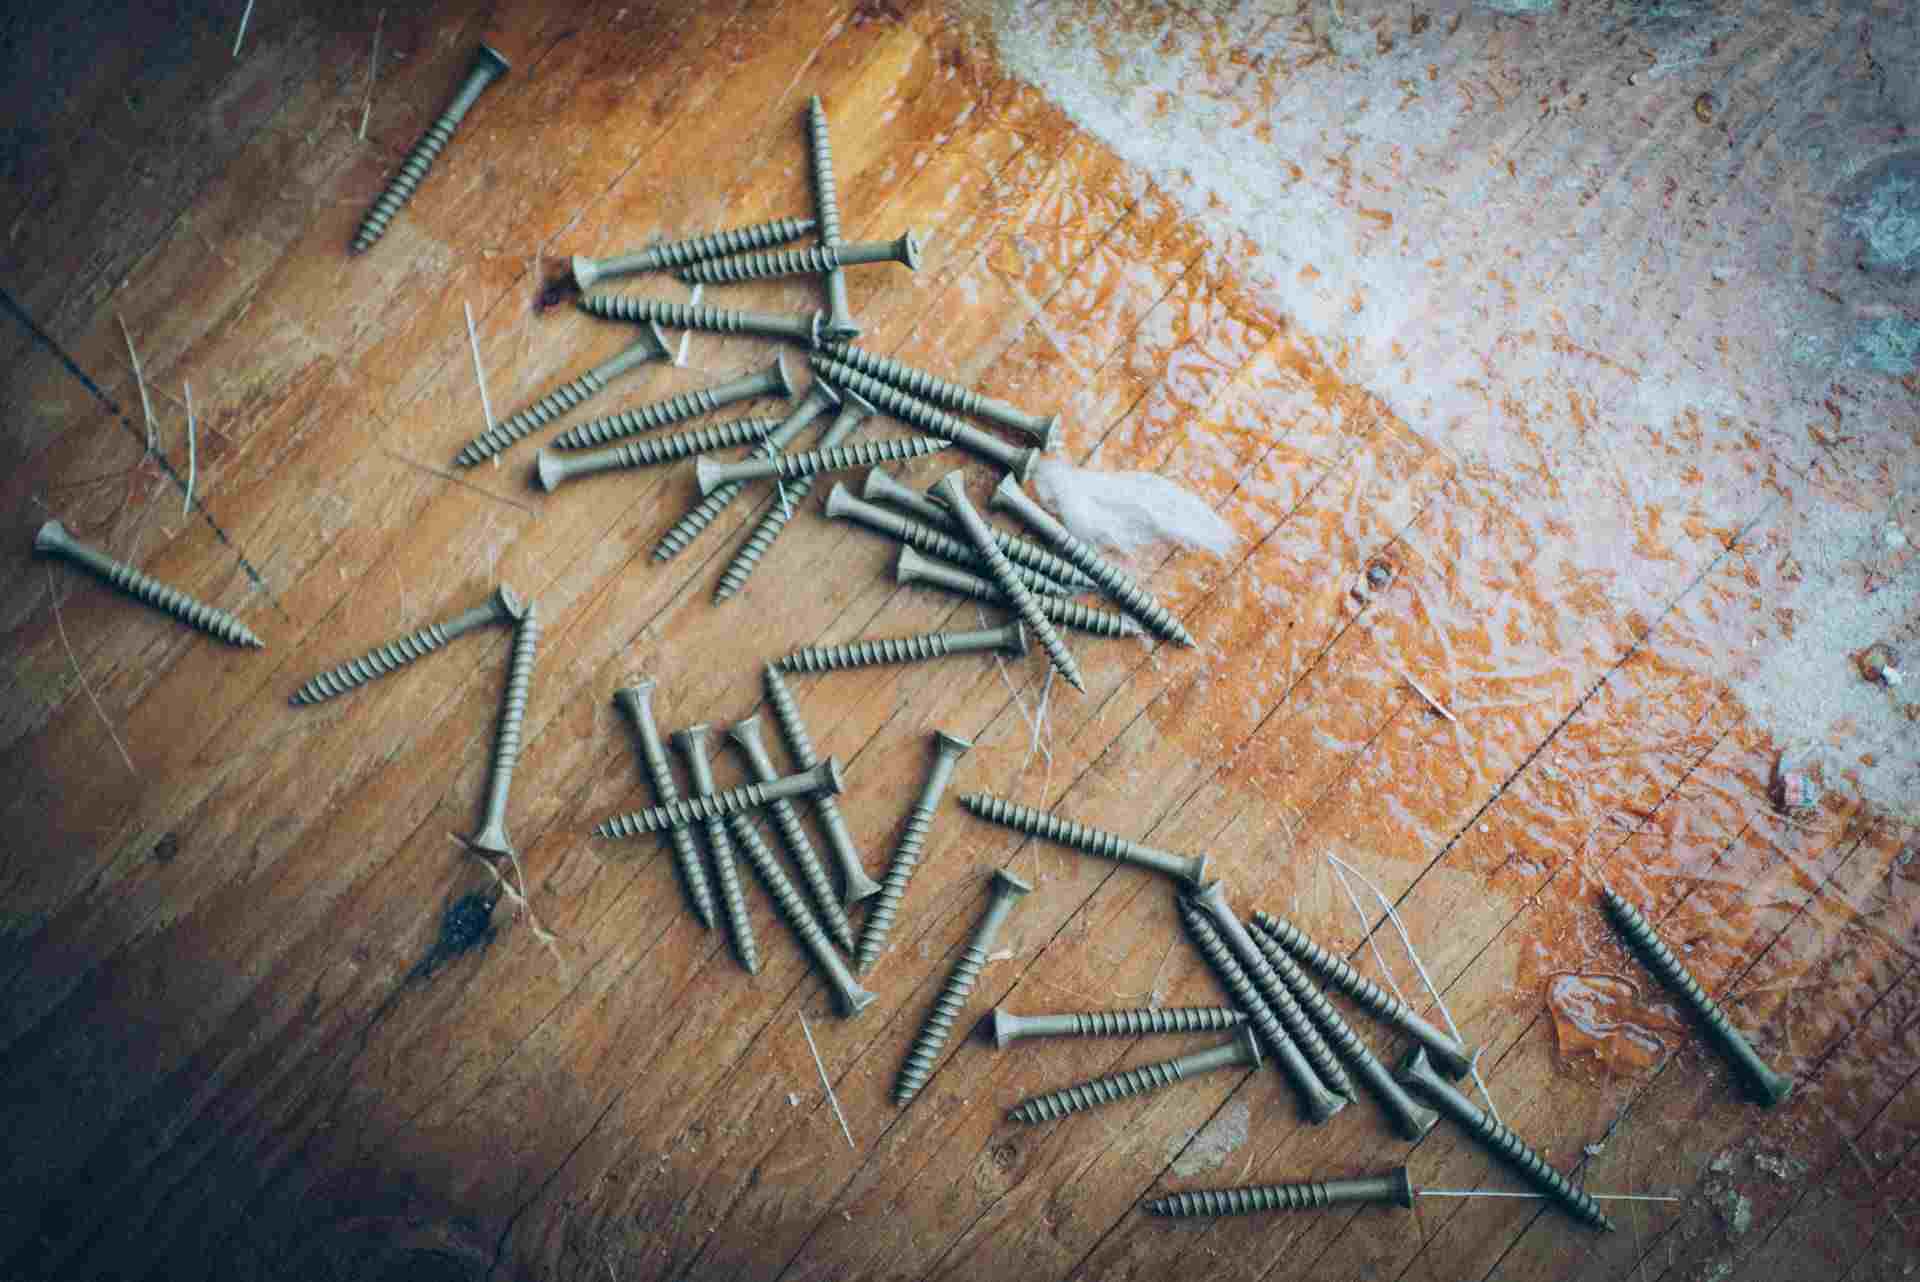 screws laying around